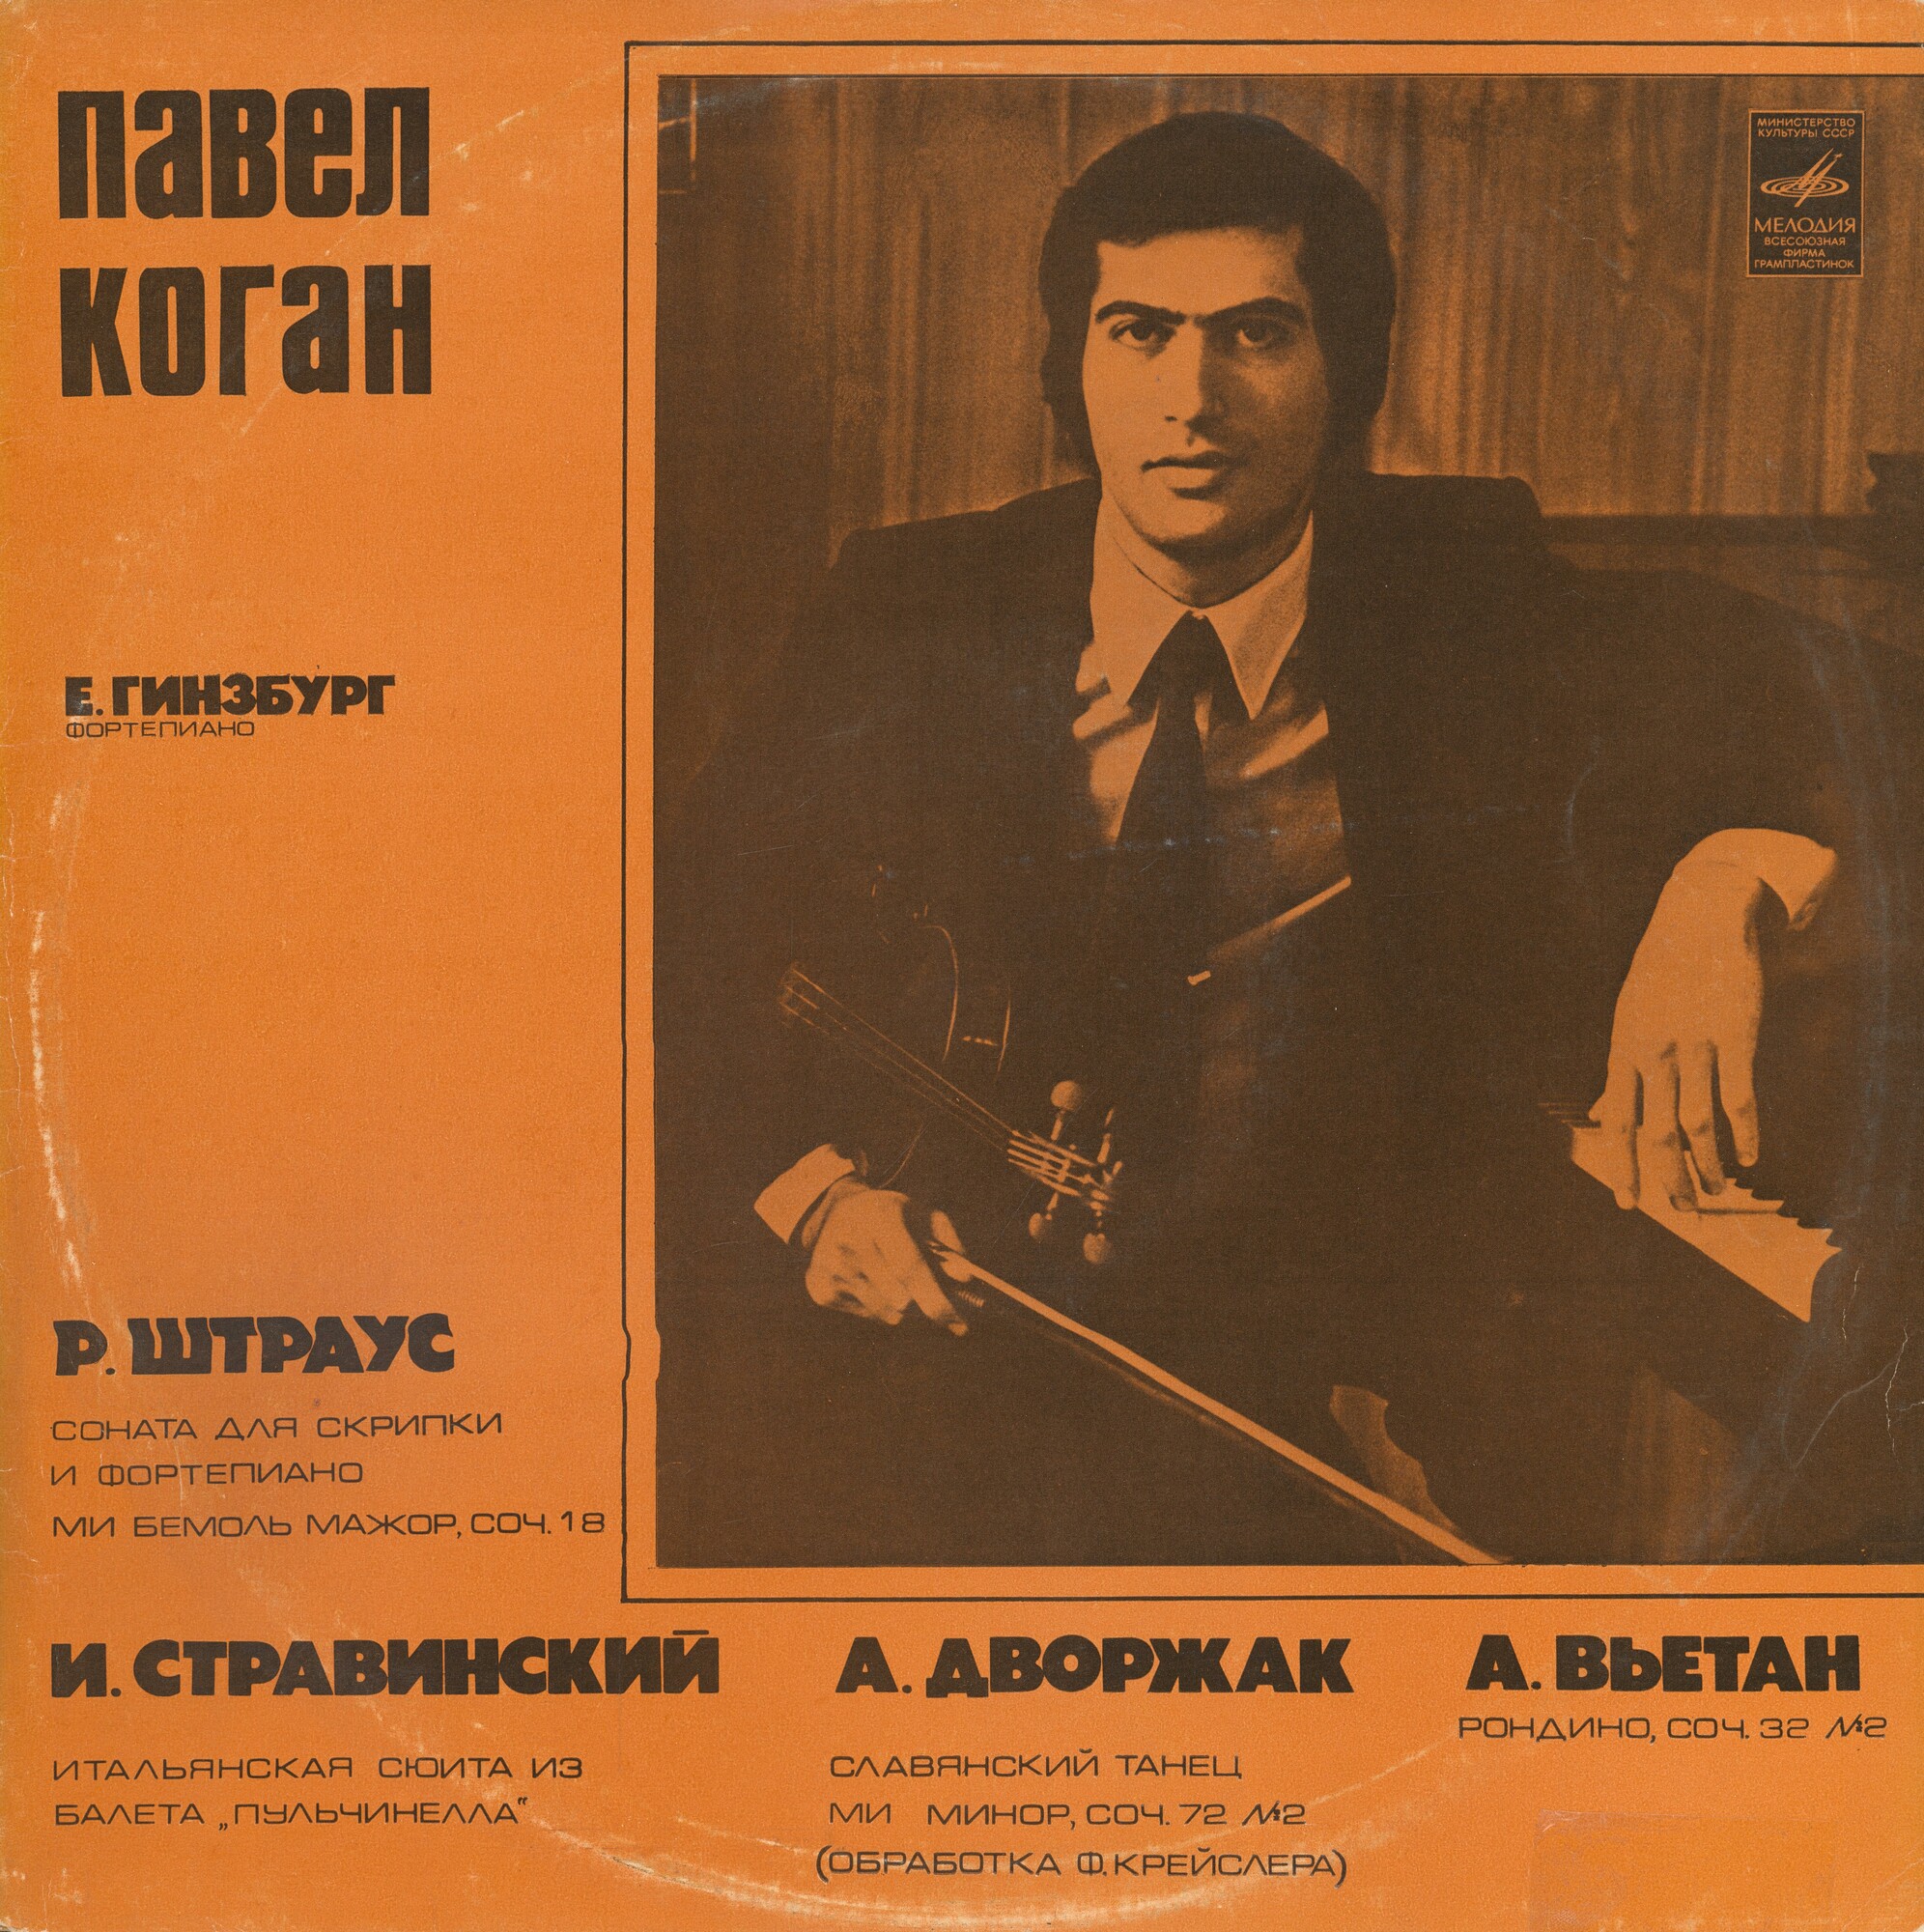 Павел Коган (скрипка)